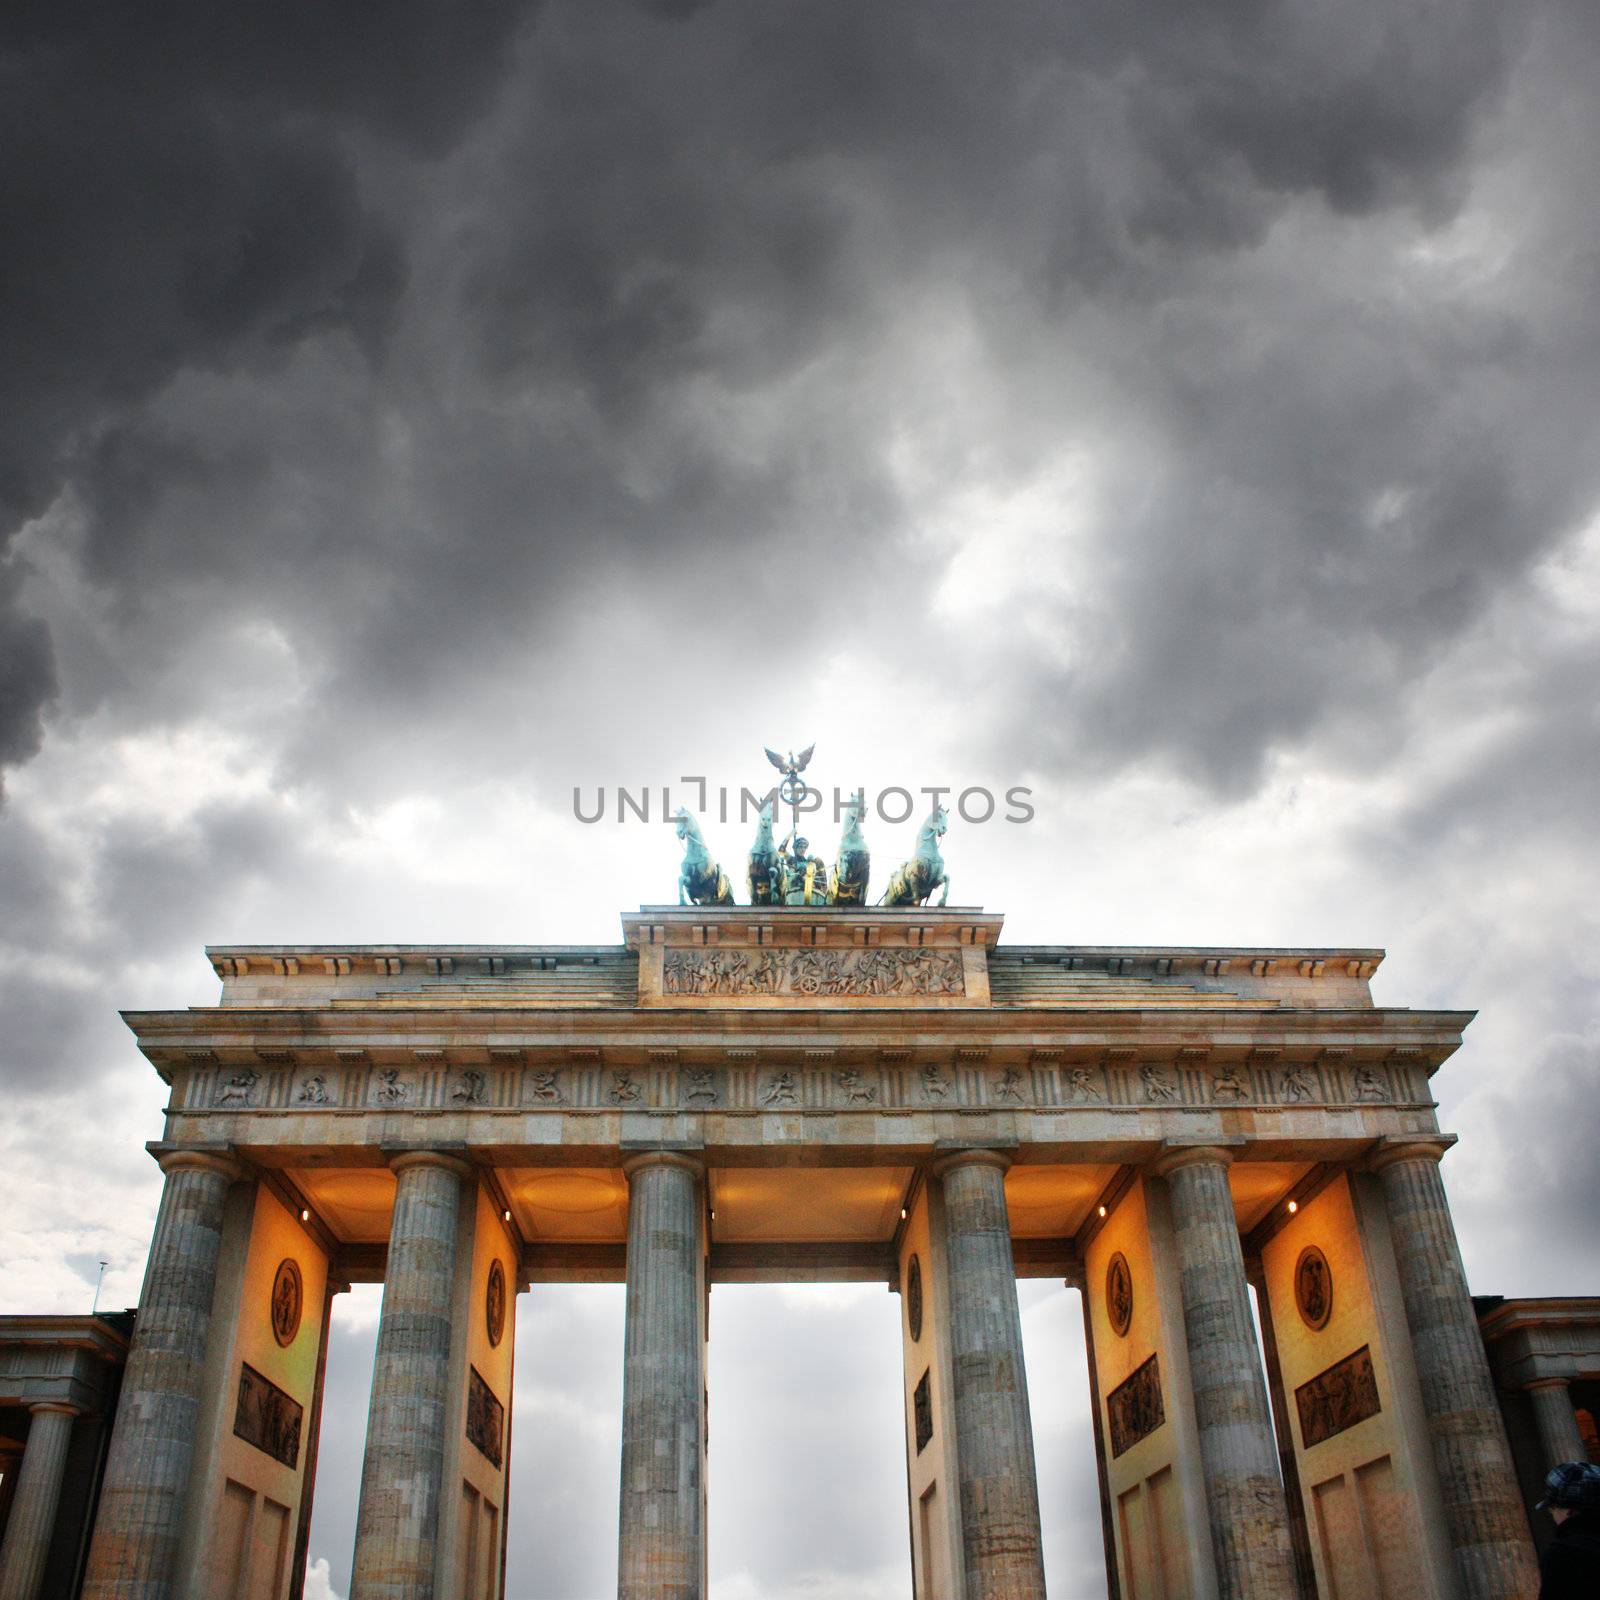 Holiday in berlin by photochecker